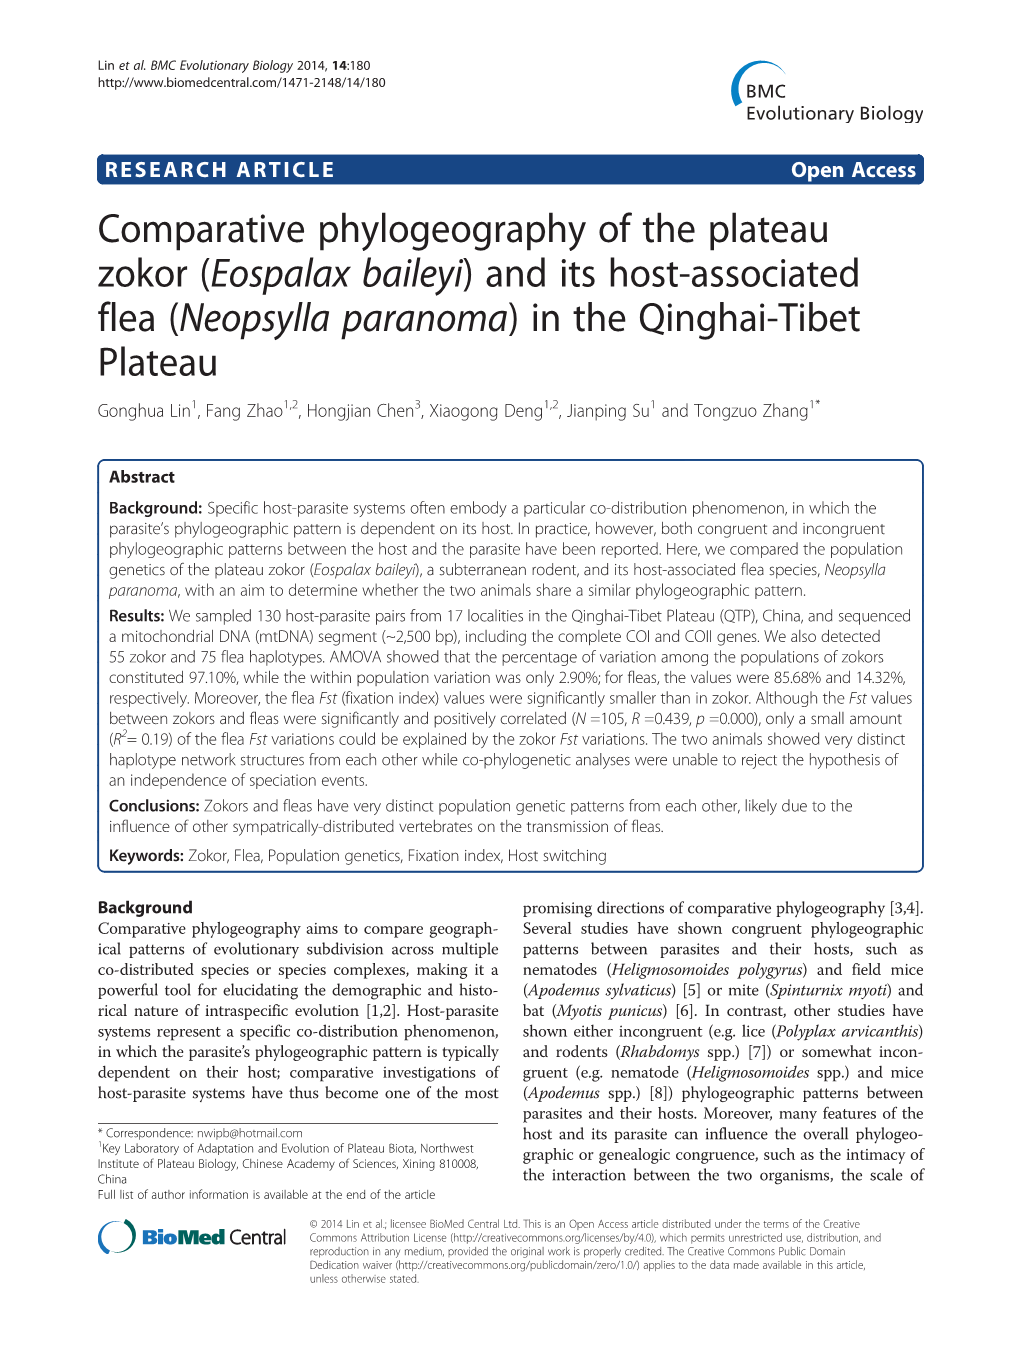 Comparative Phylogeography of the Plateau Zokor (Eospalax Baileyi